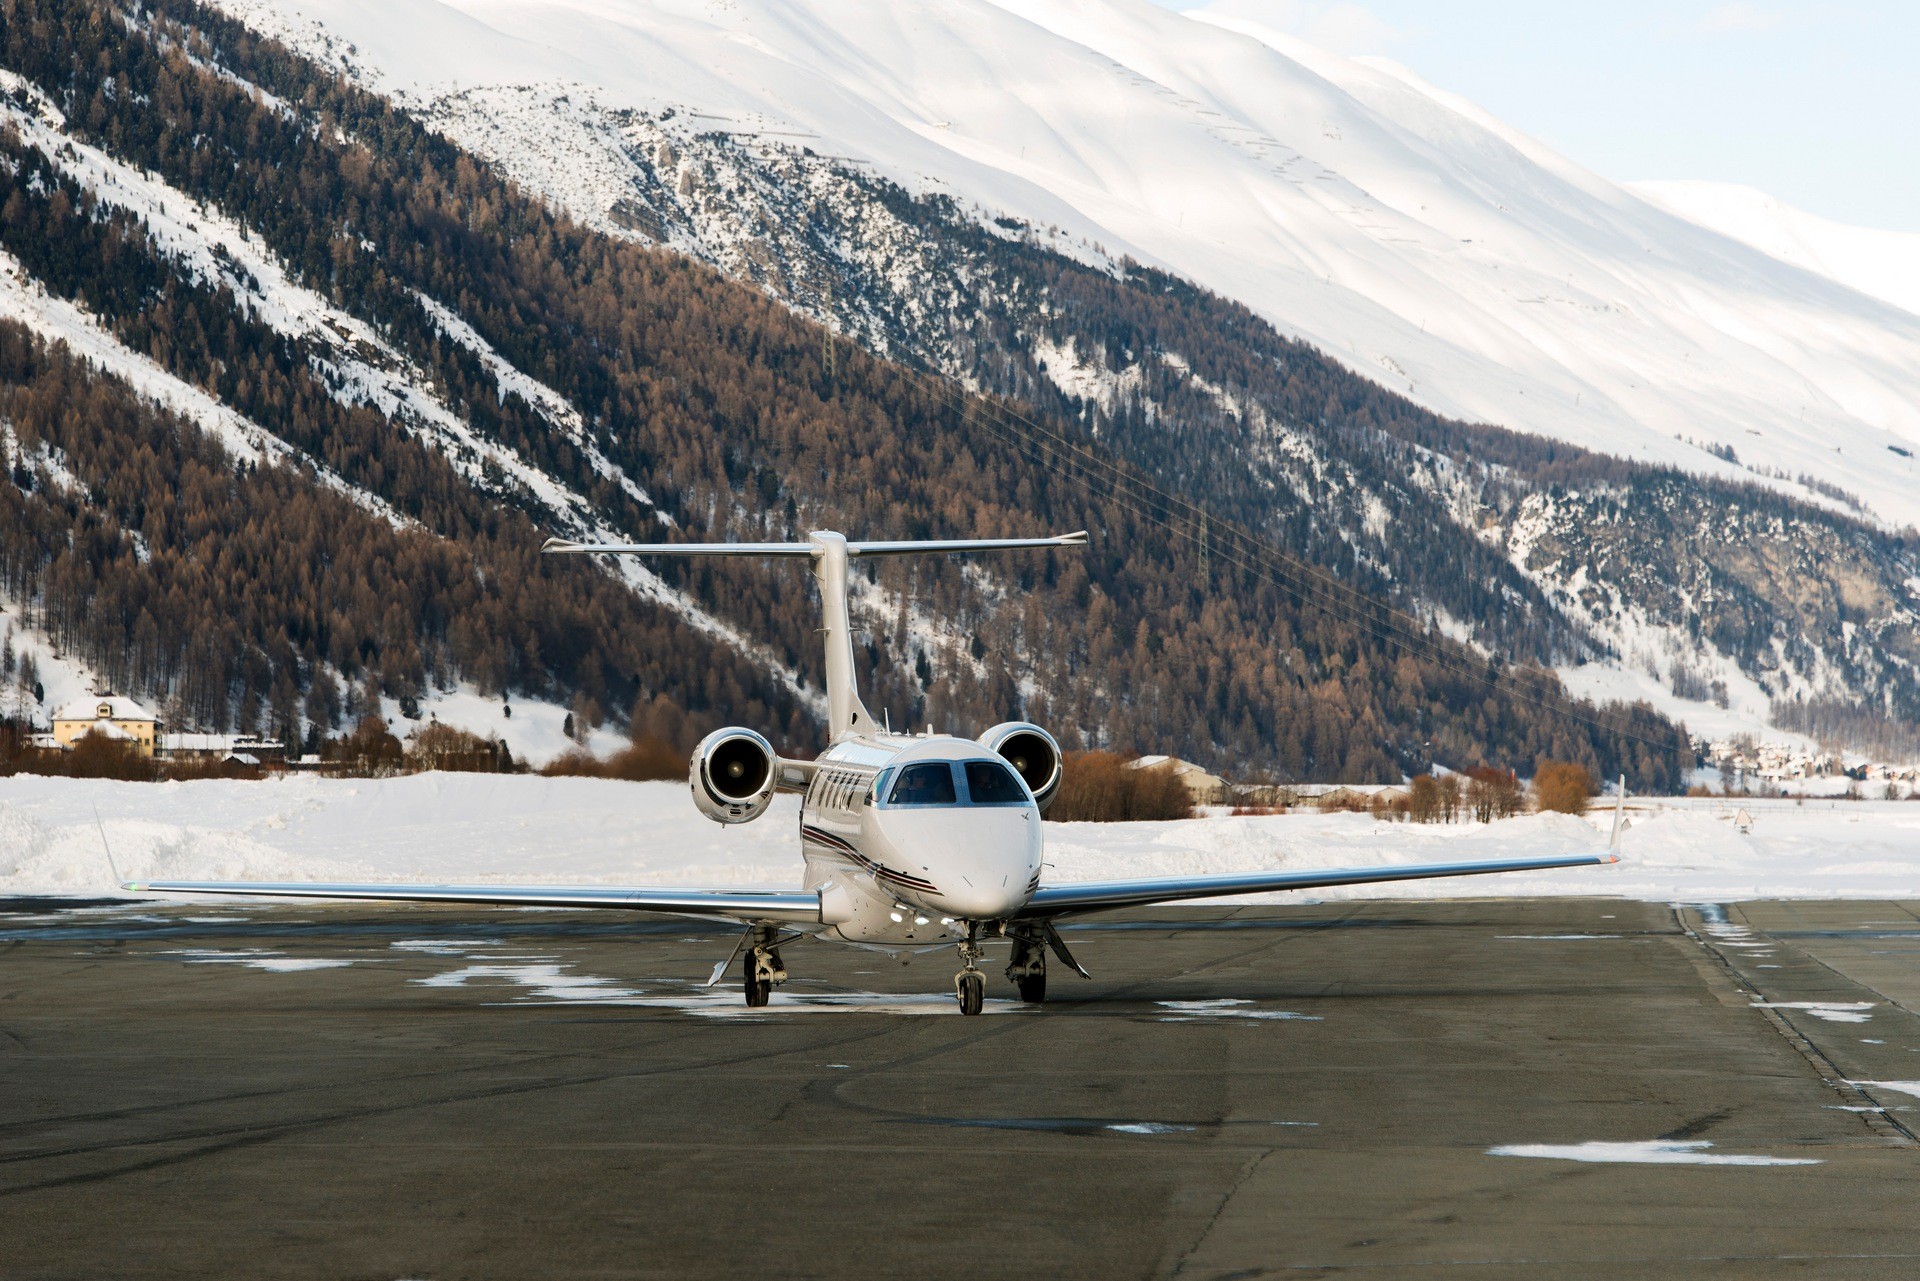 Colorado’s Top Three Ski Resort Destinations for Private Jet Travelers